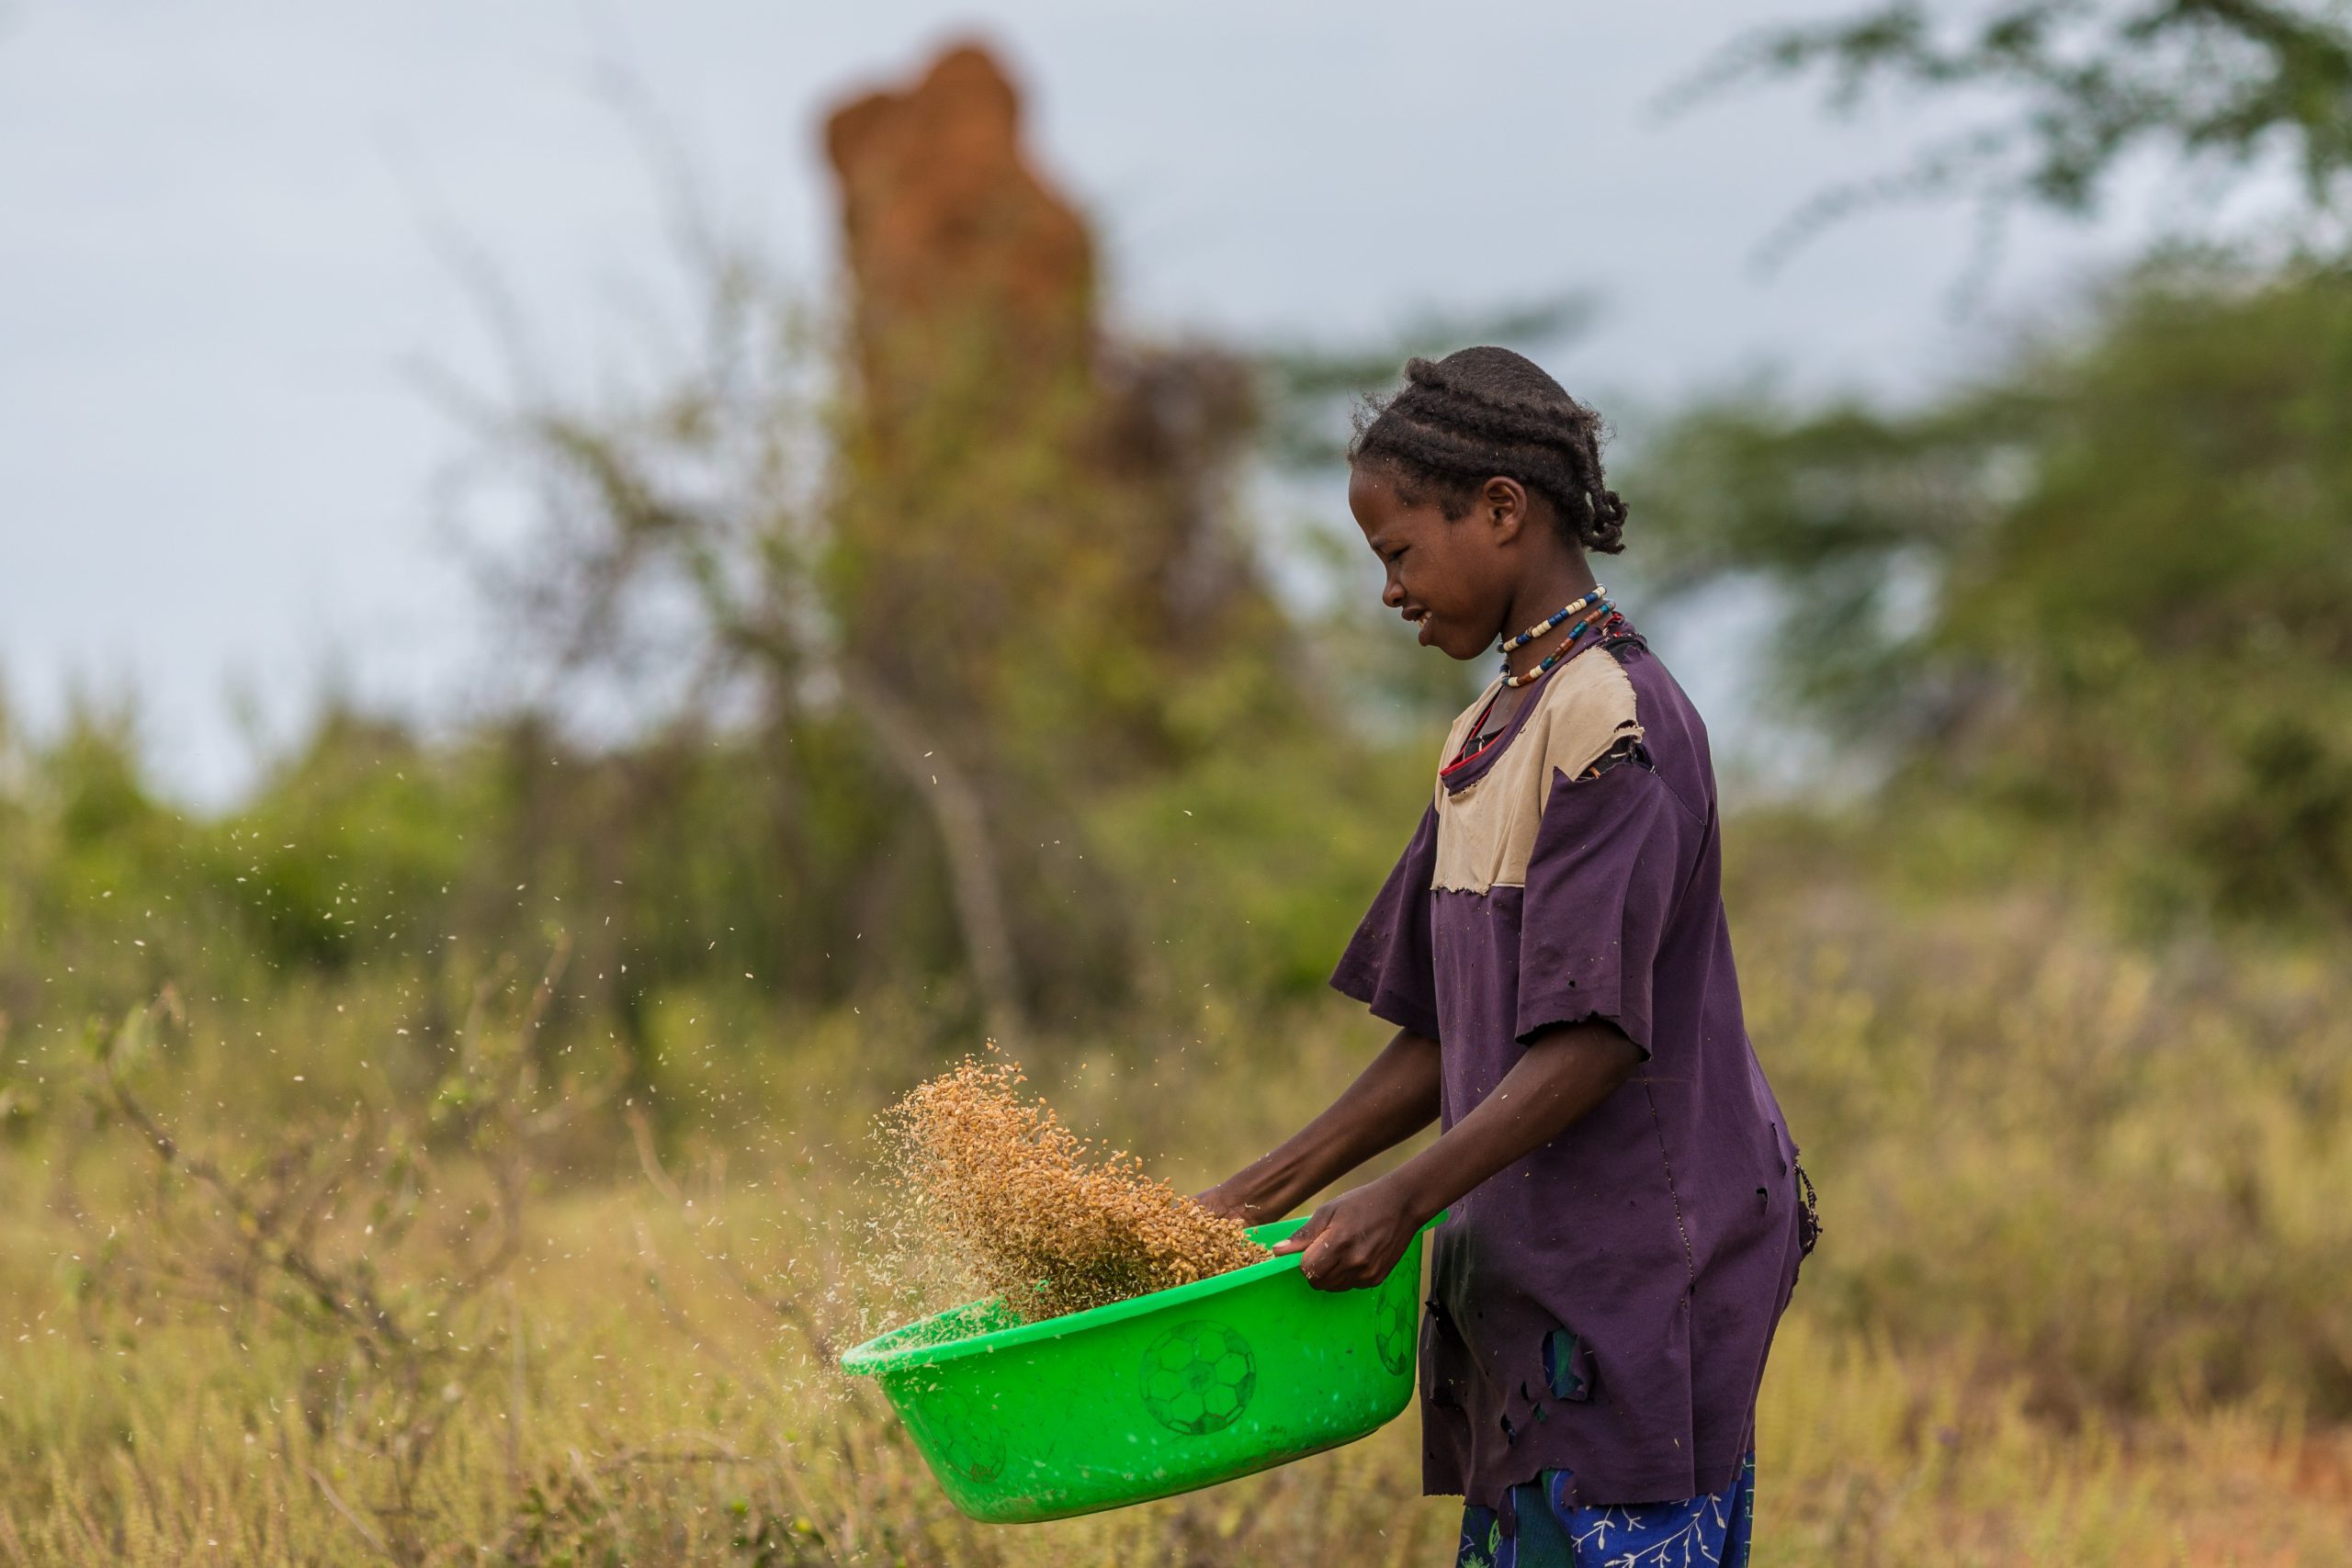 Drought tolerant crops needed to help Africa. Photo: Shutterstock